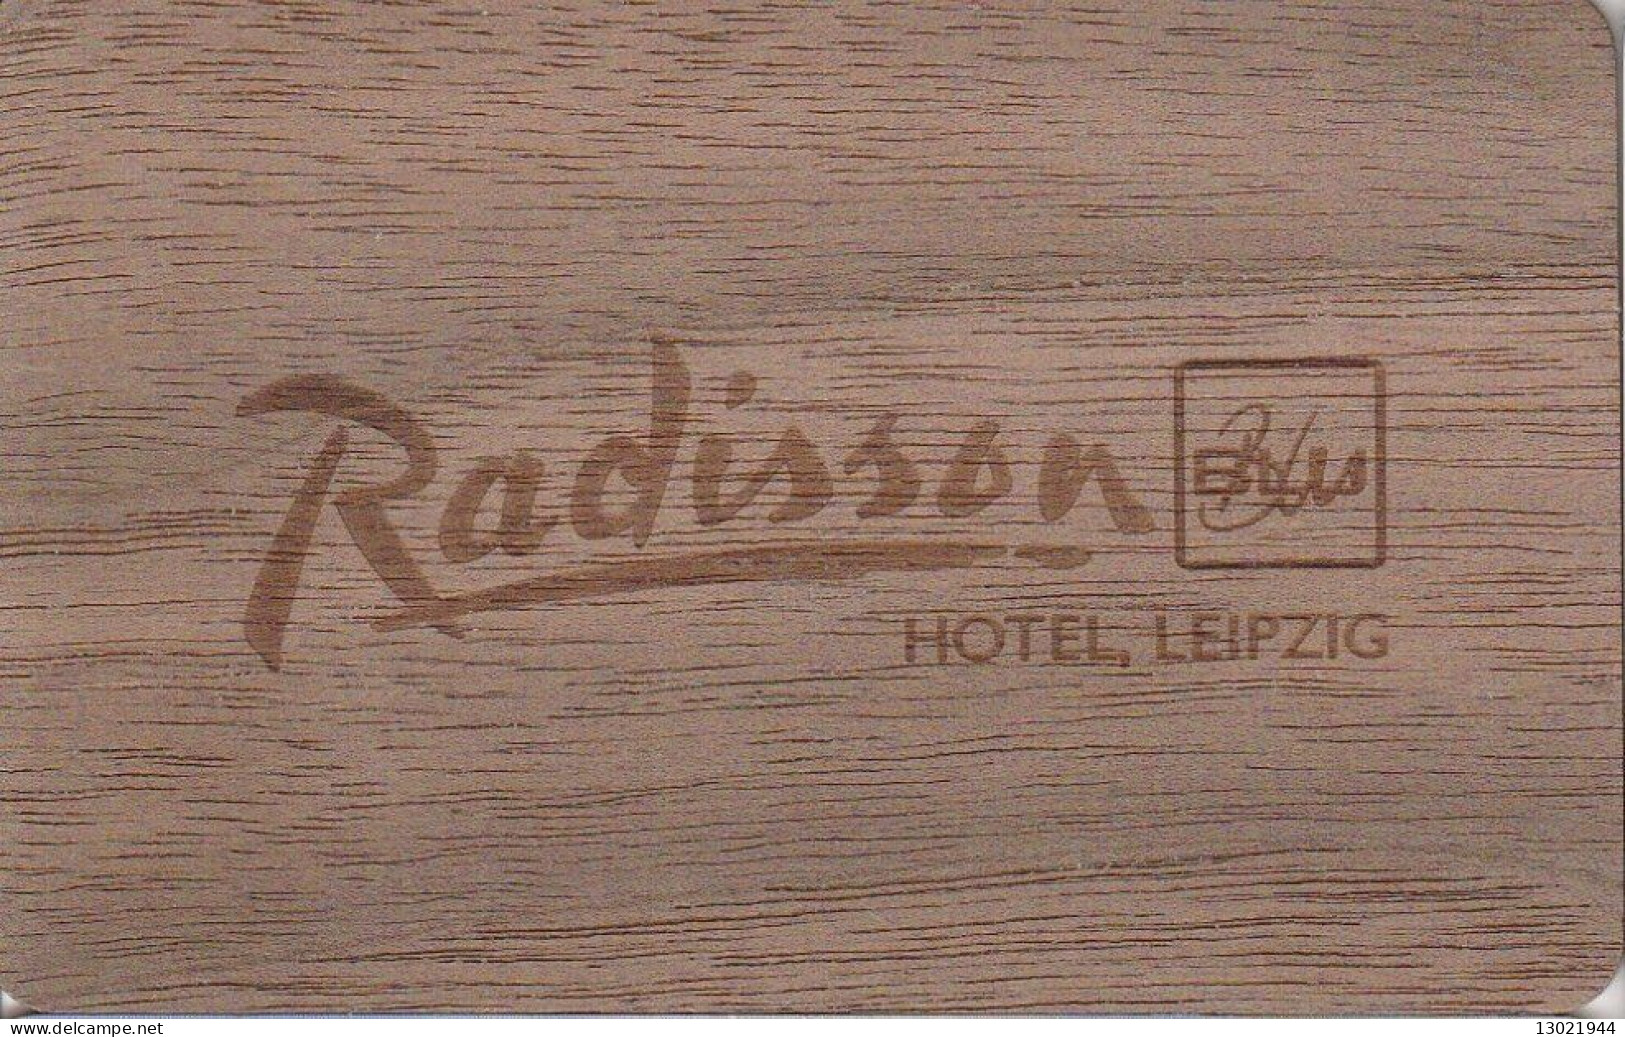 GERMANIA  KEY HOTEL  Radisson BLU Hotel Leipzig - WOODEN CARD - Hotelkarten